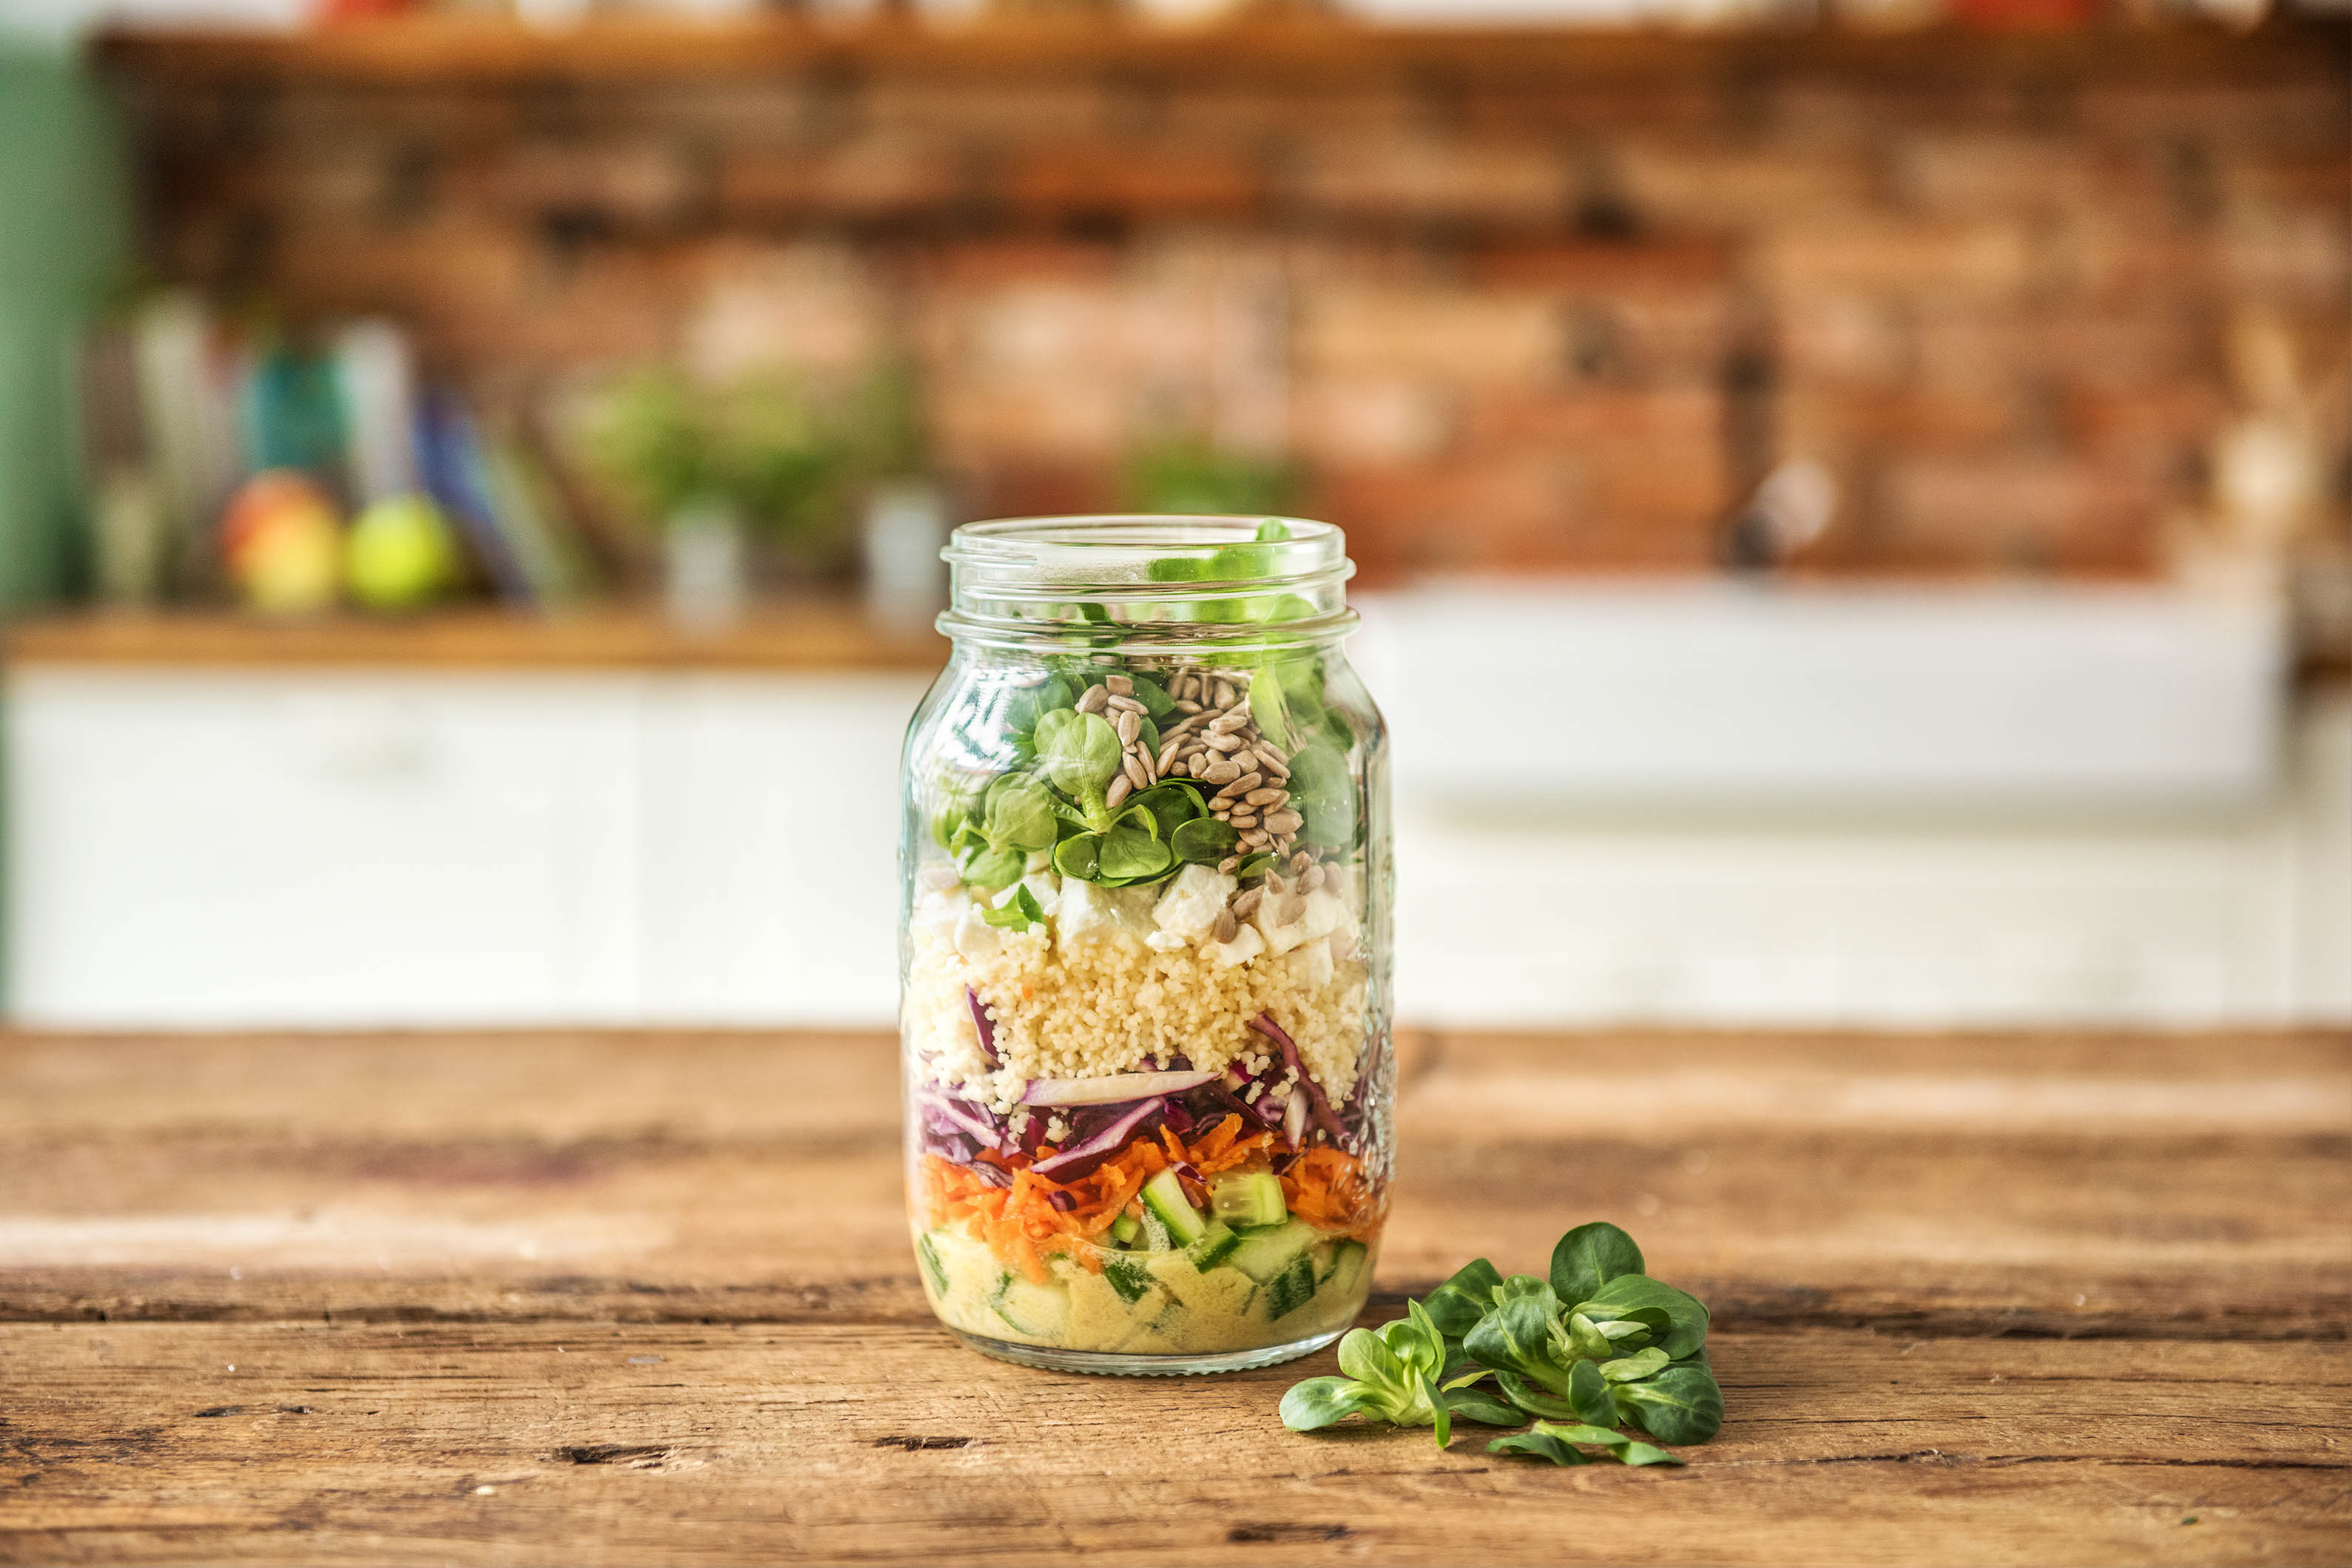 Unsere liebsten Salatsorten: Feldsalat